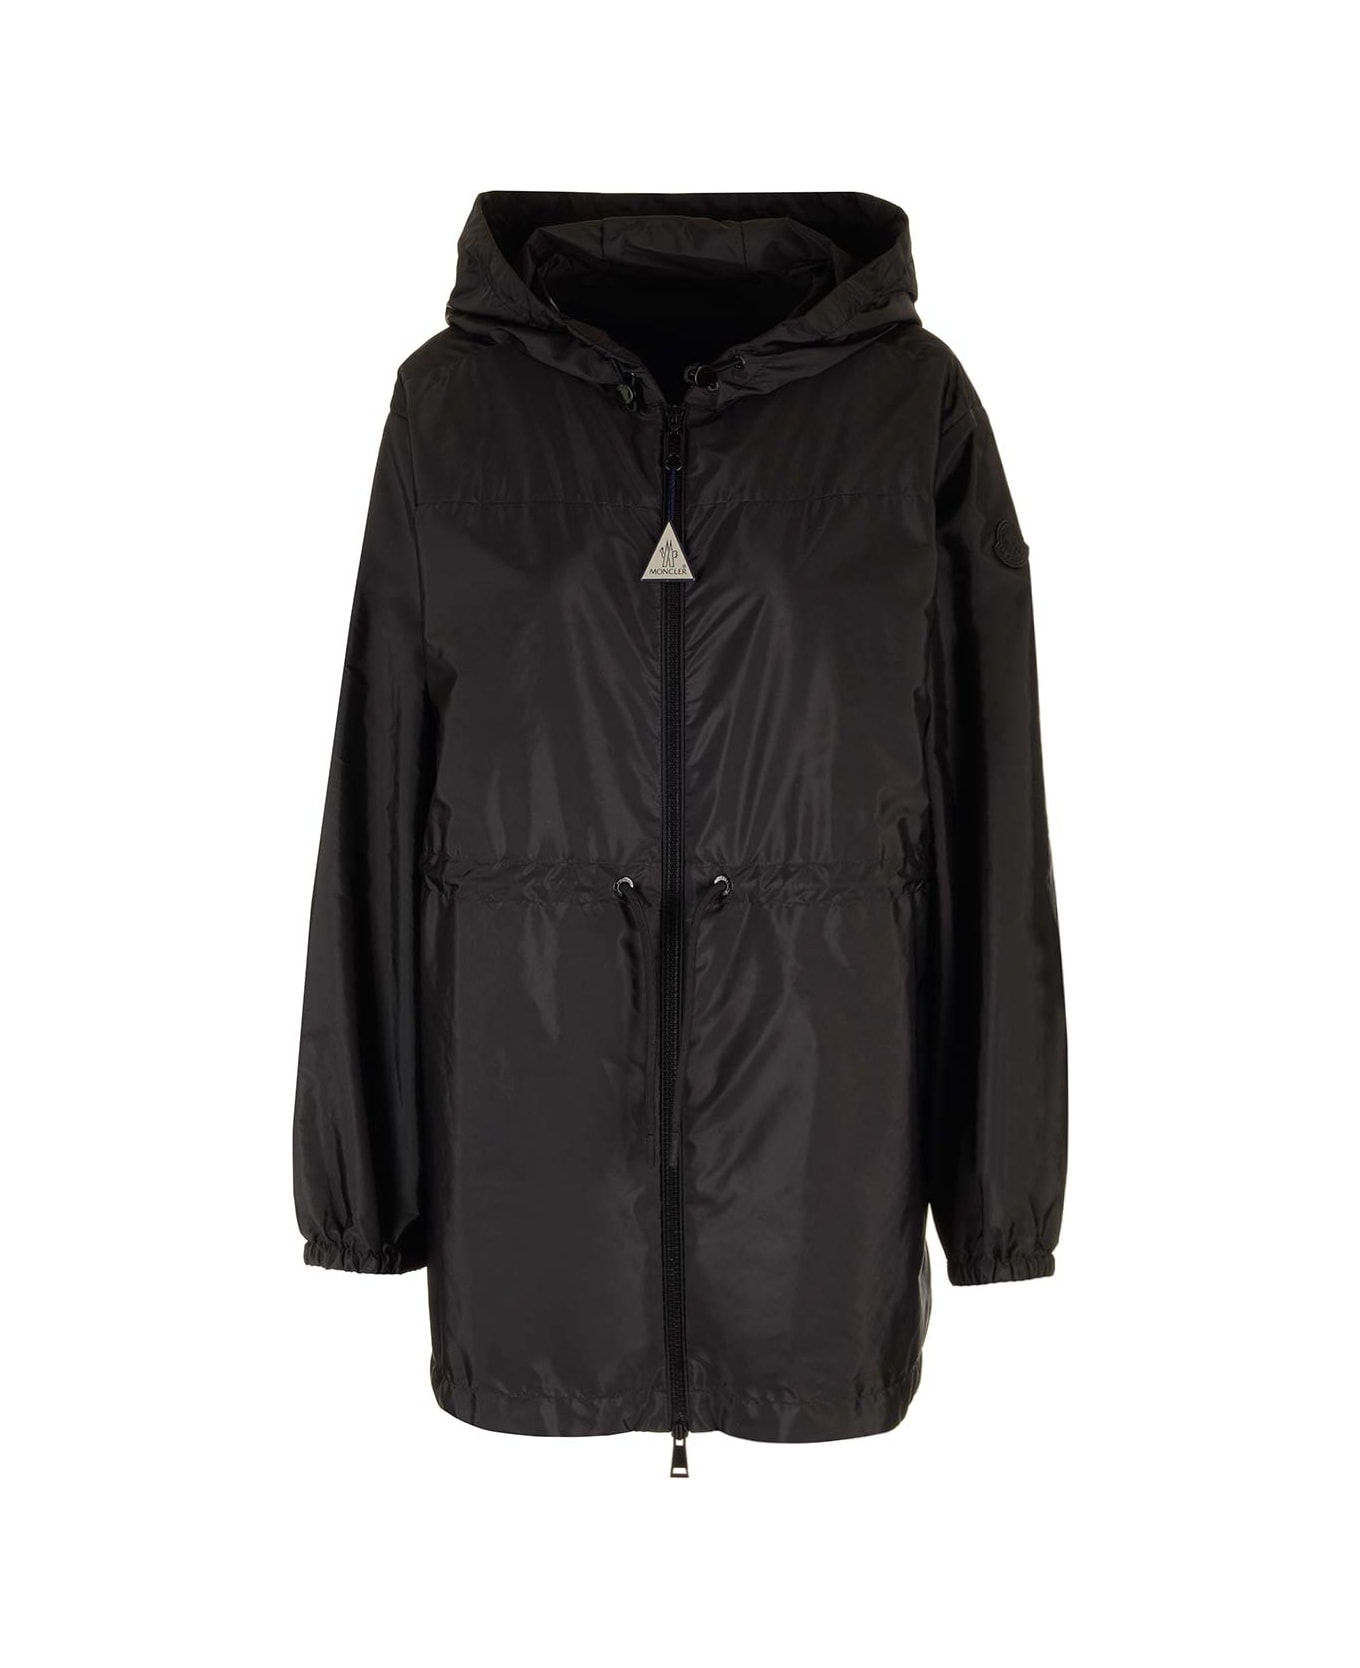 Moncler 'filira' Jacket With Hood - Black